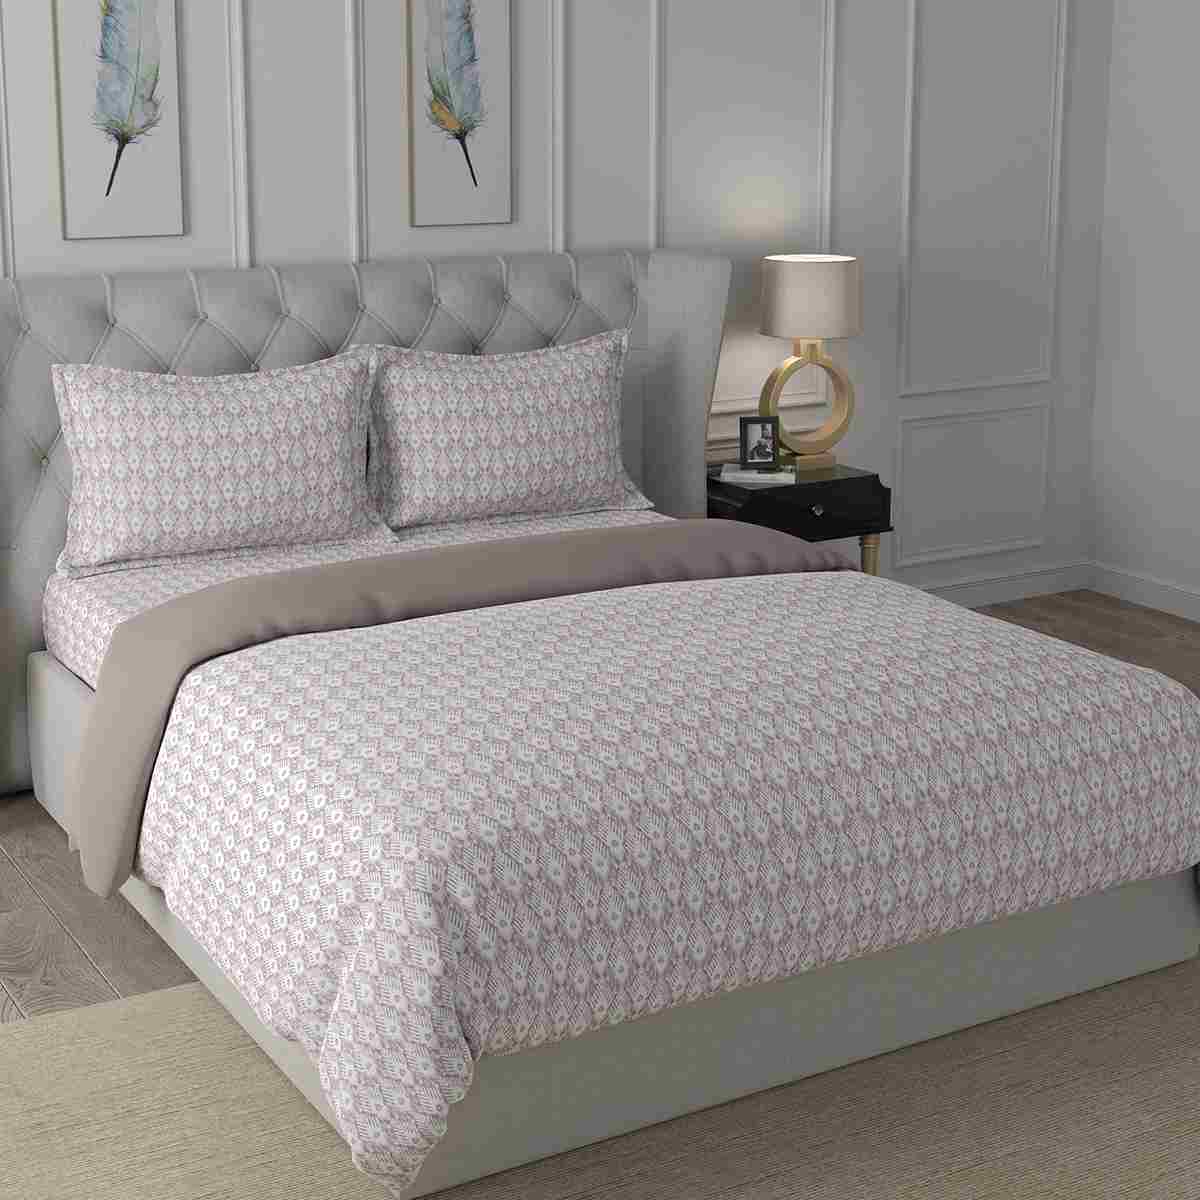 Regency Navajo Summer AC Quilt/Quilted Bed Cover/Comforter Pink